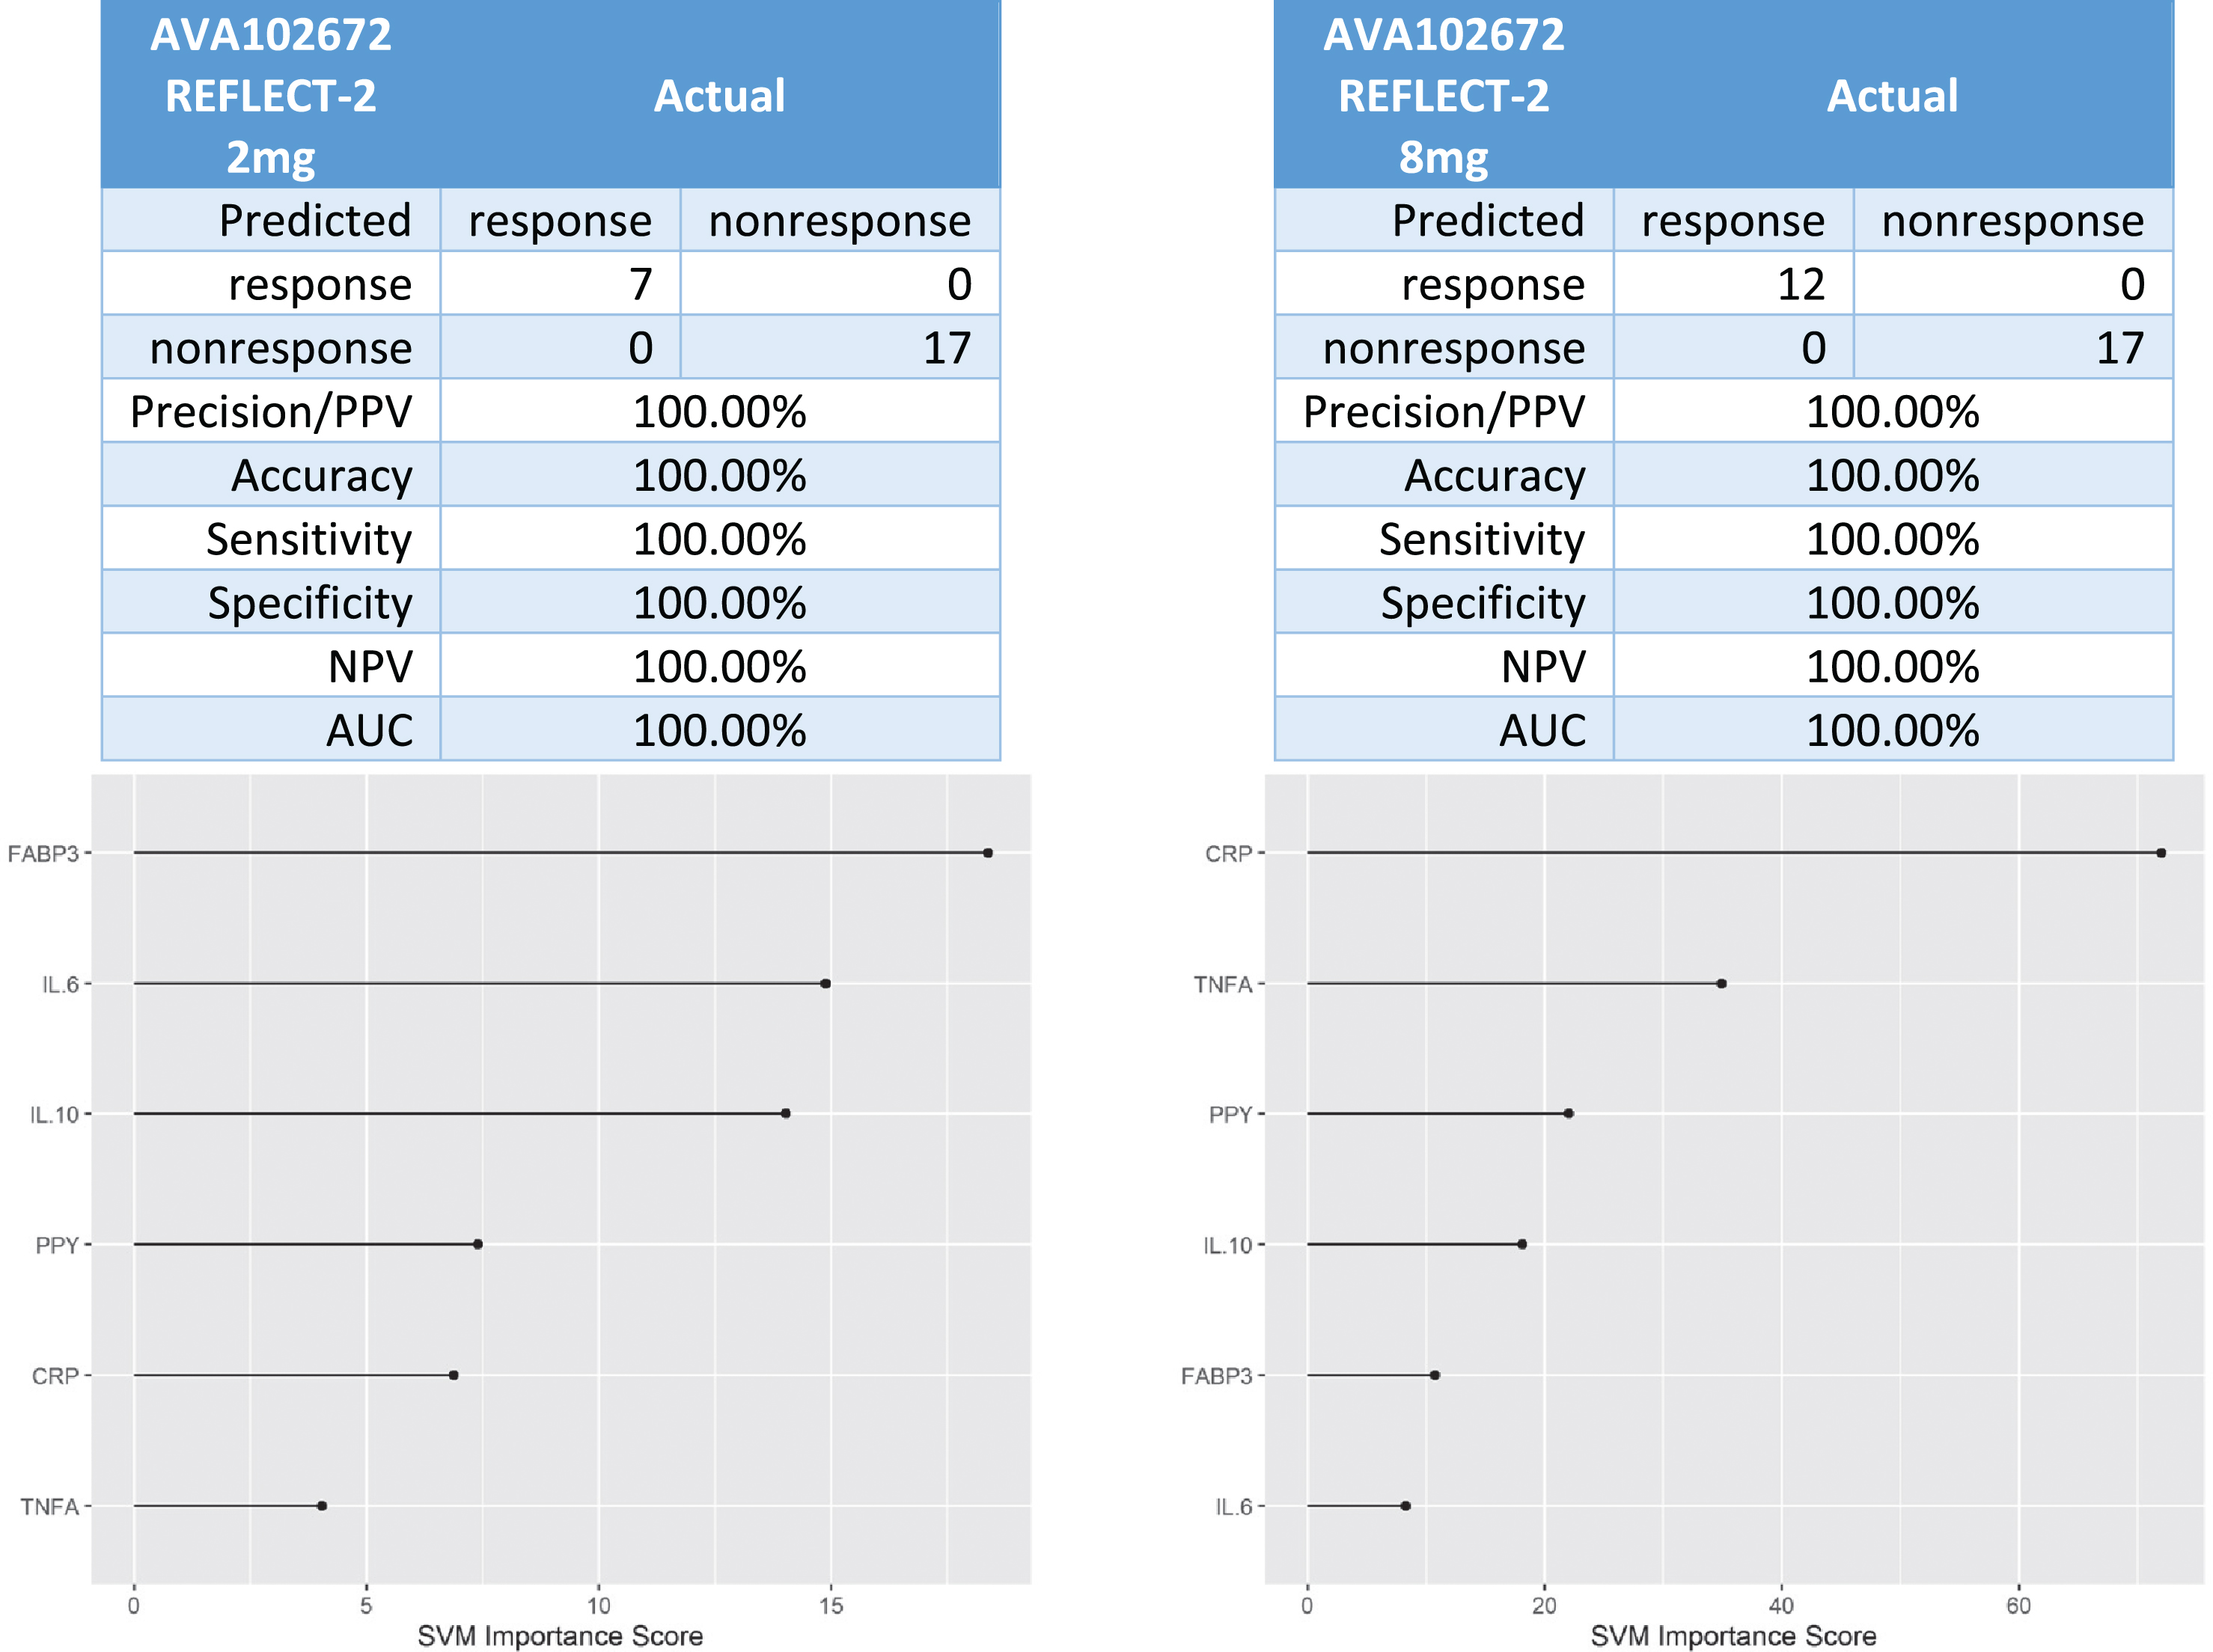 Predictive biomarker accuracy in identifying responders versus non-responders in the Phase 3 trial AV102672.